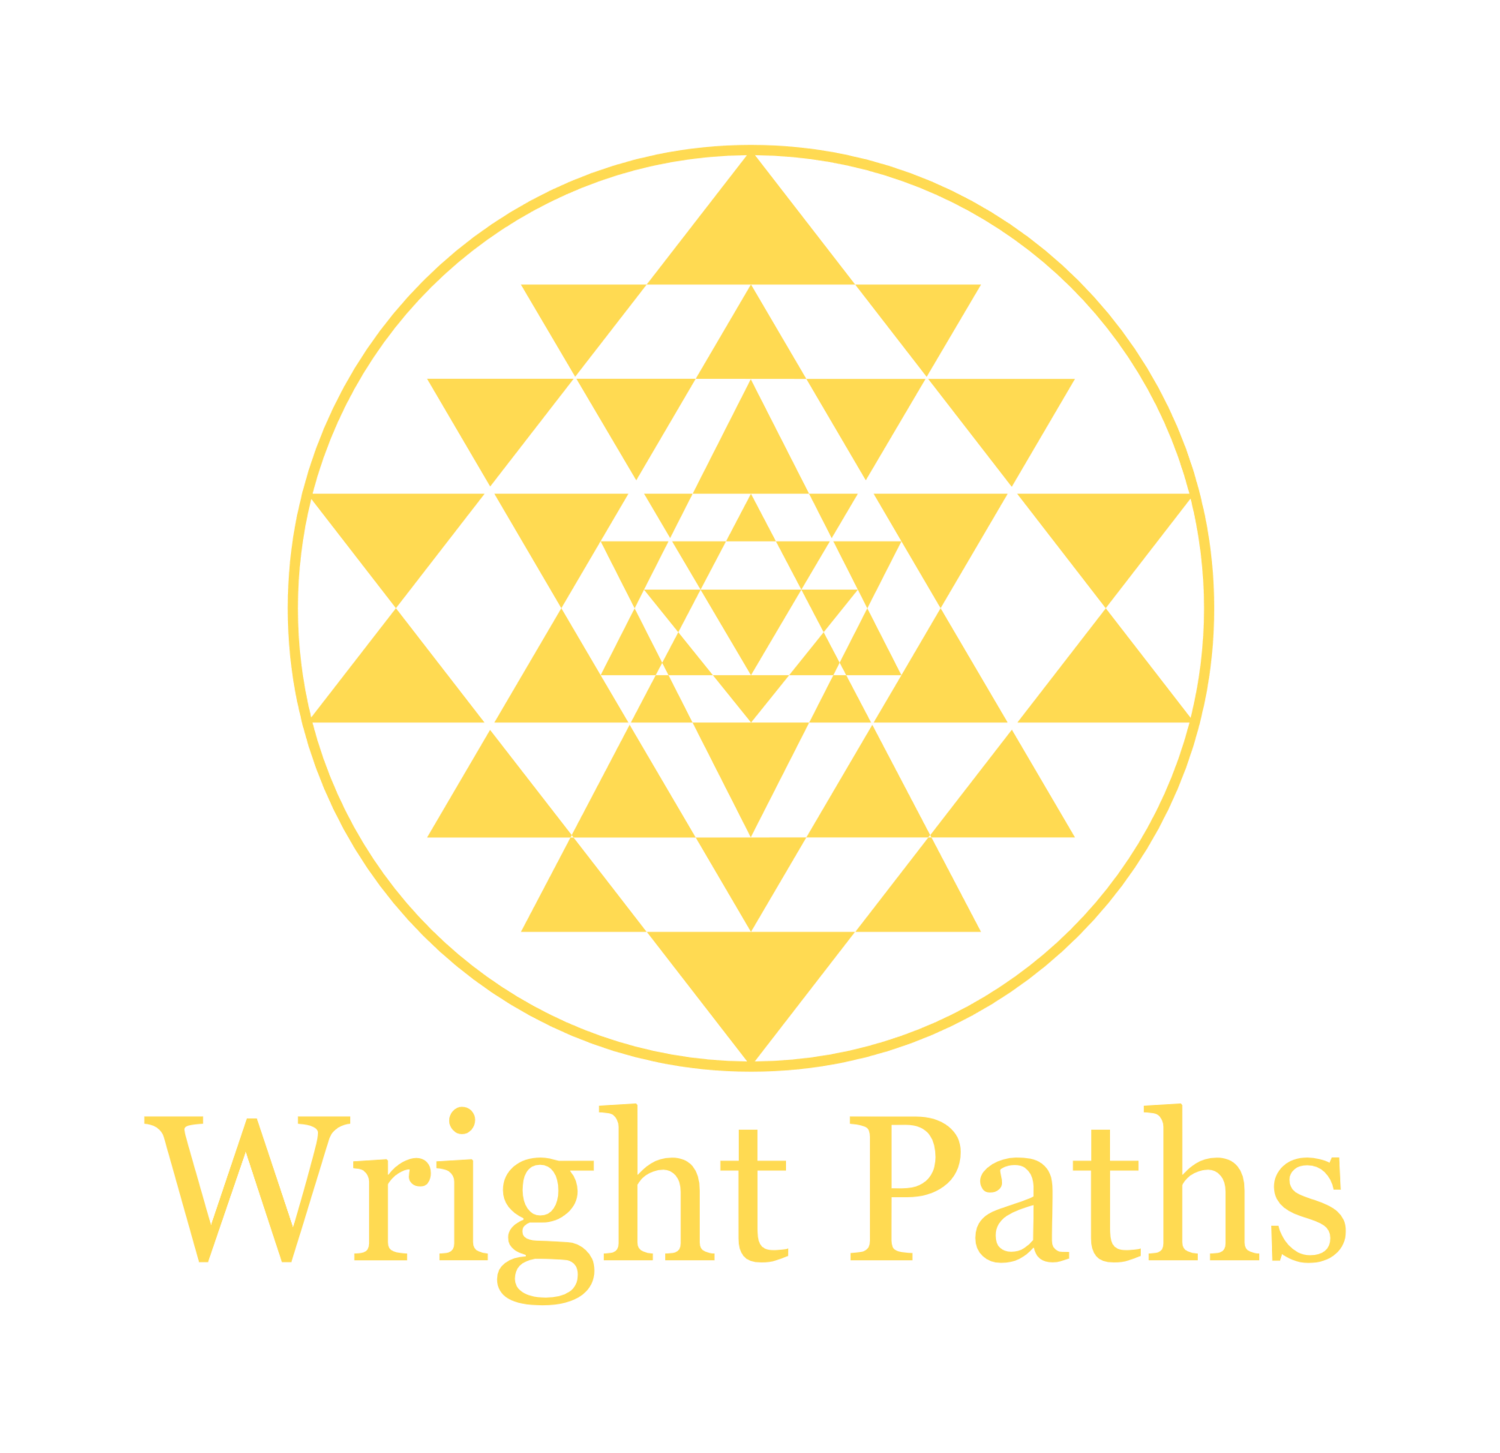 Wright Paths